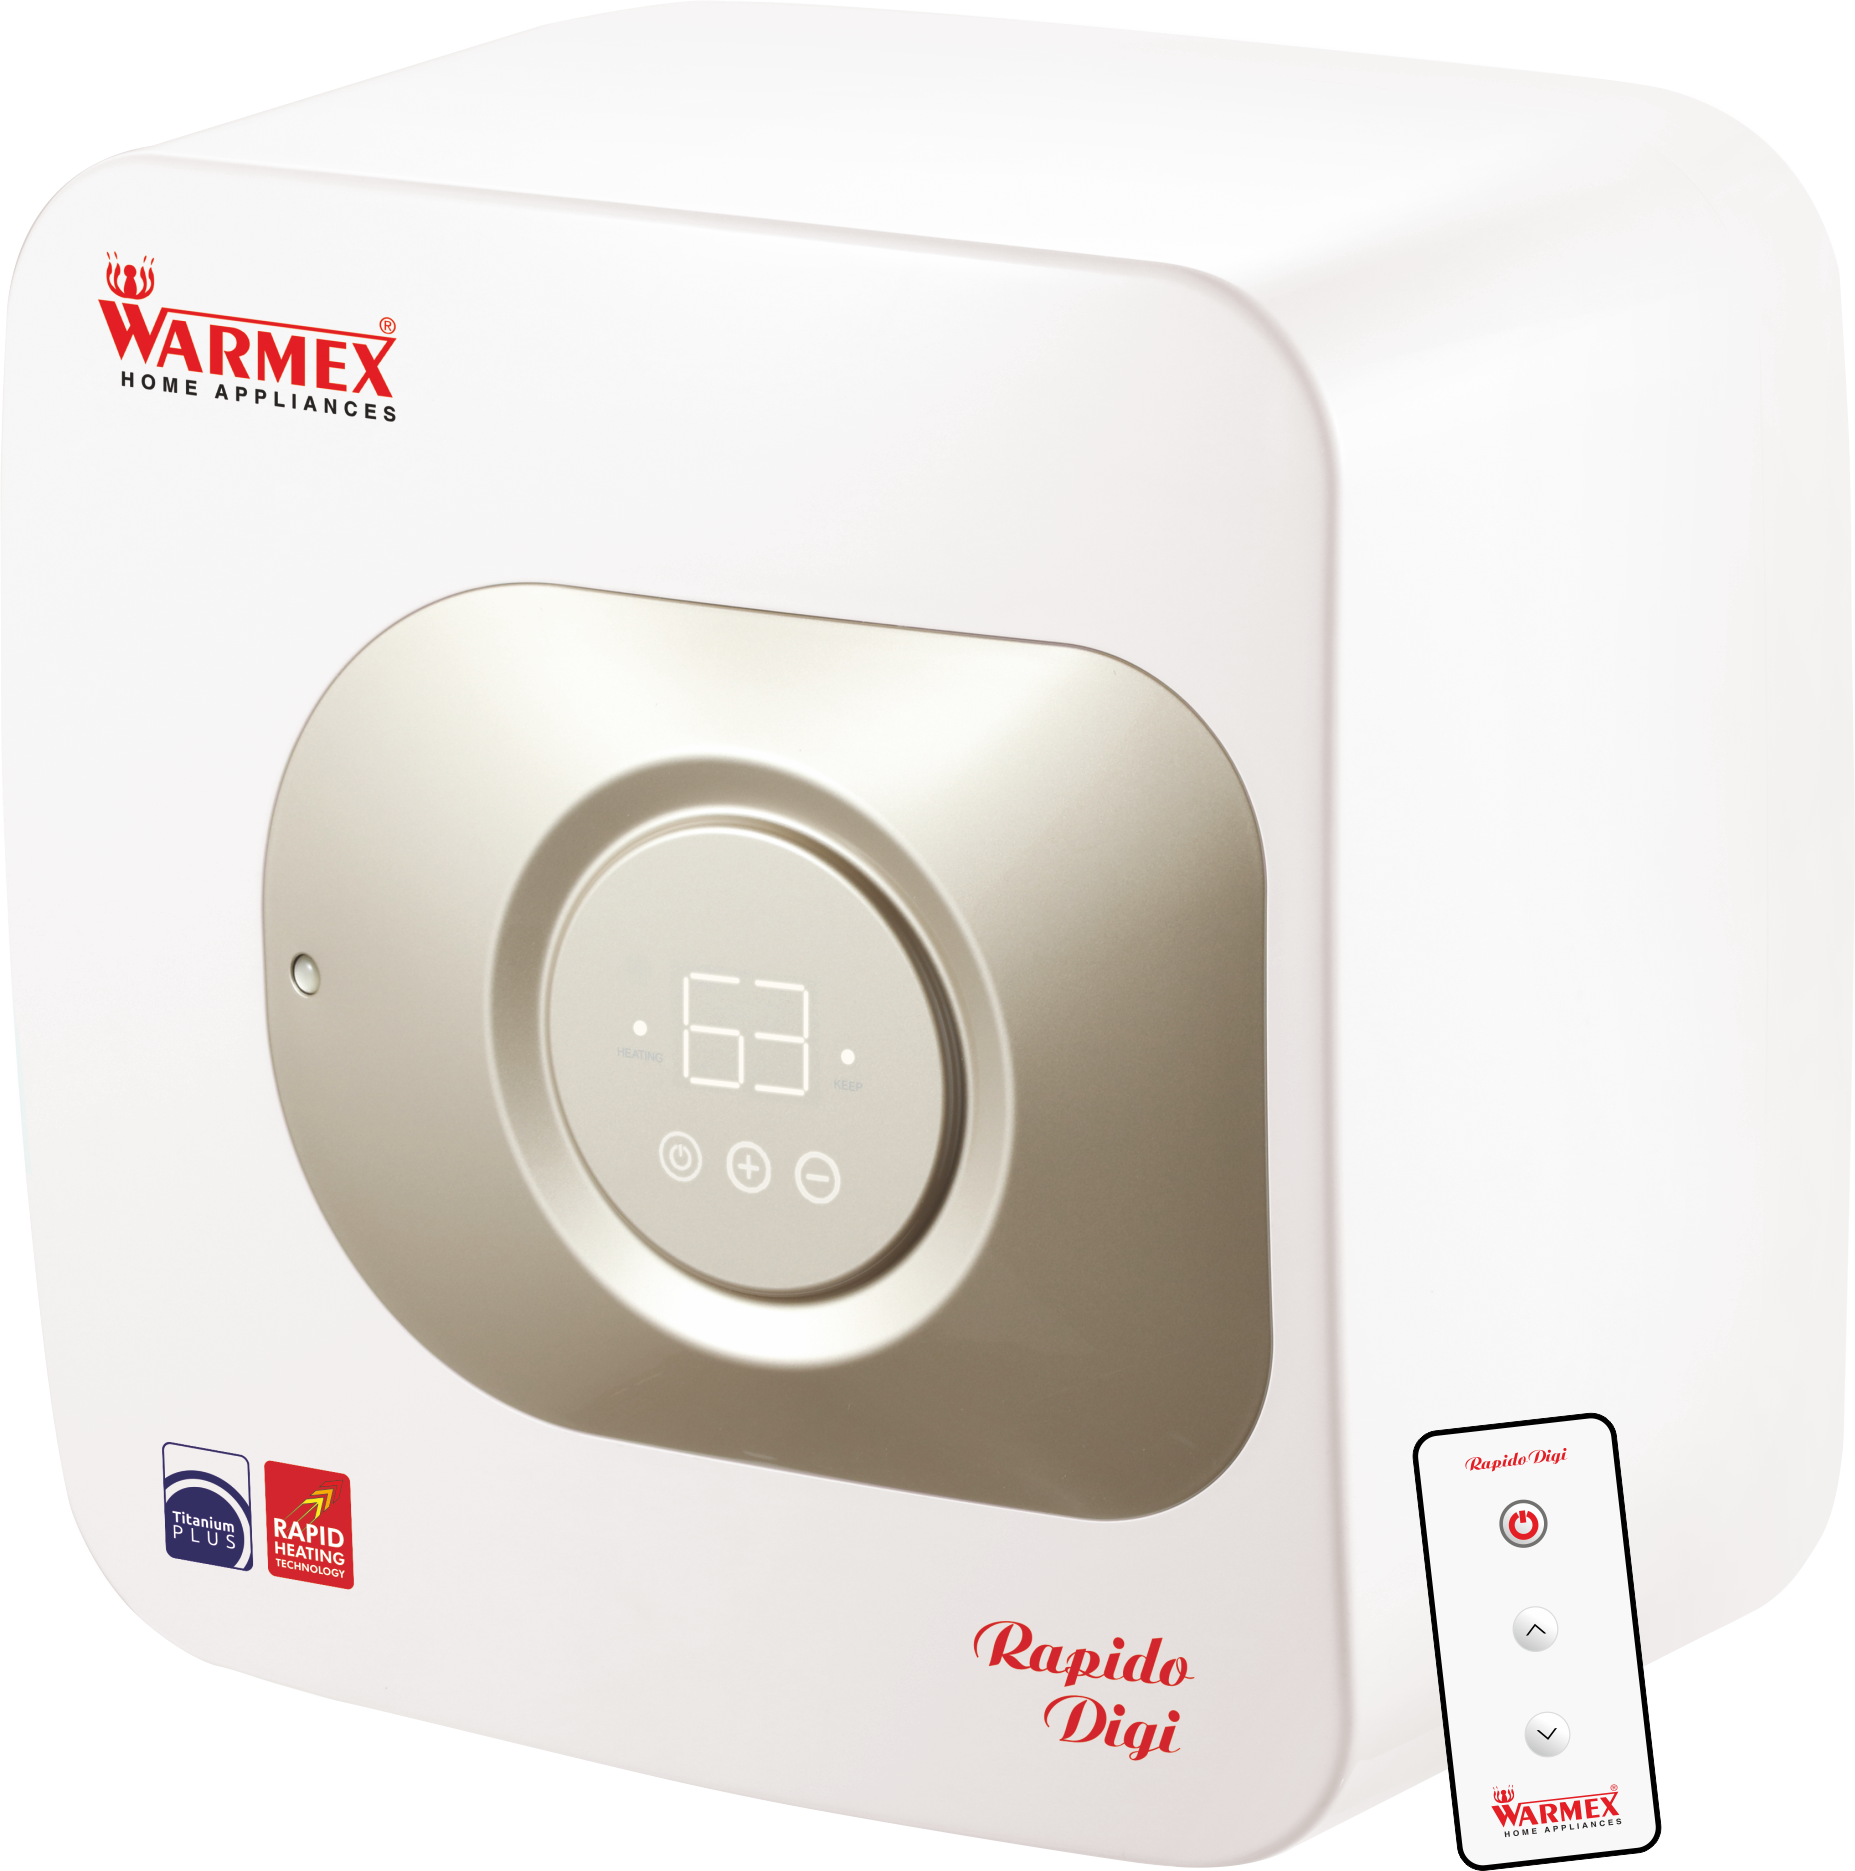 WARMEX STORAGE ELECTRIC WATER HEATER - HIGH PRESSURE (DIGITAL) RAPIDO DIGI 15 warmexhomeappliances2